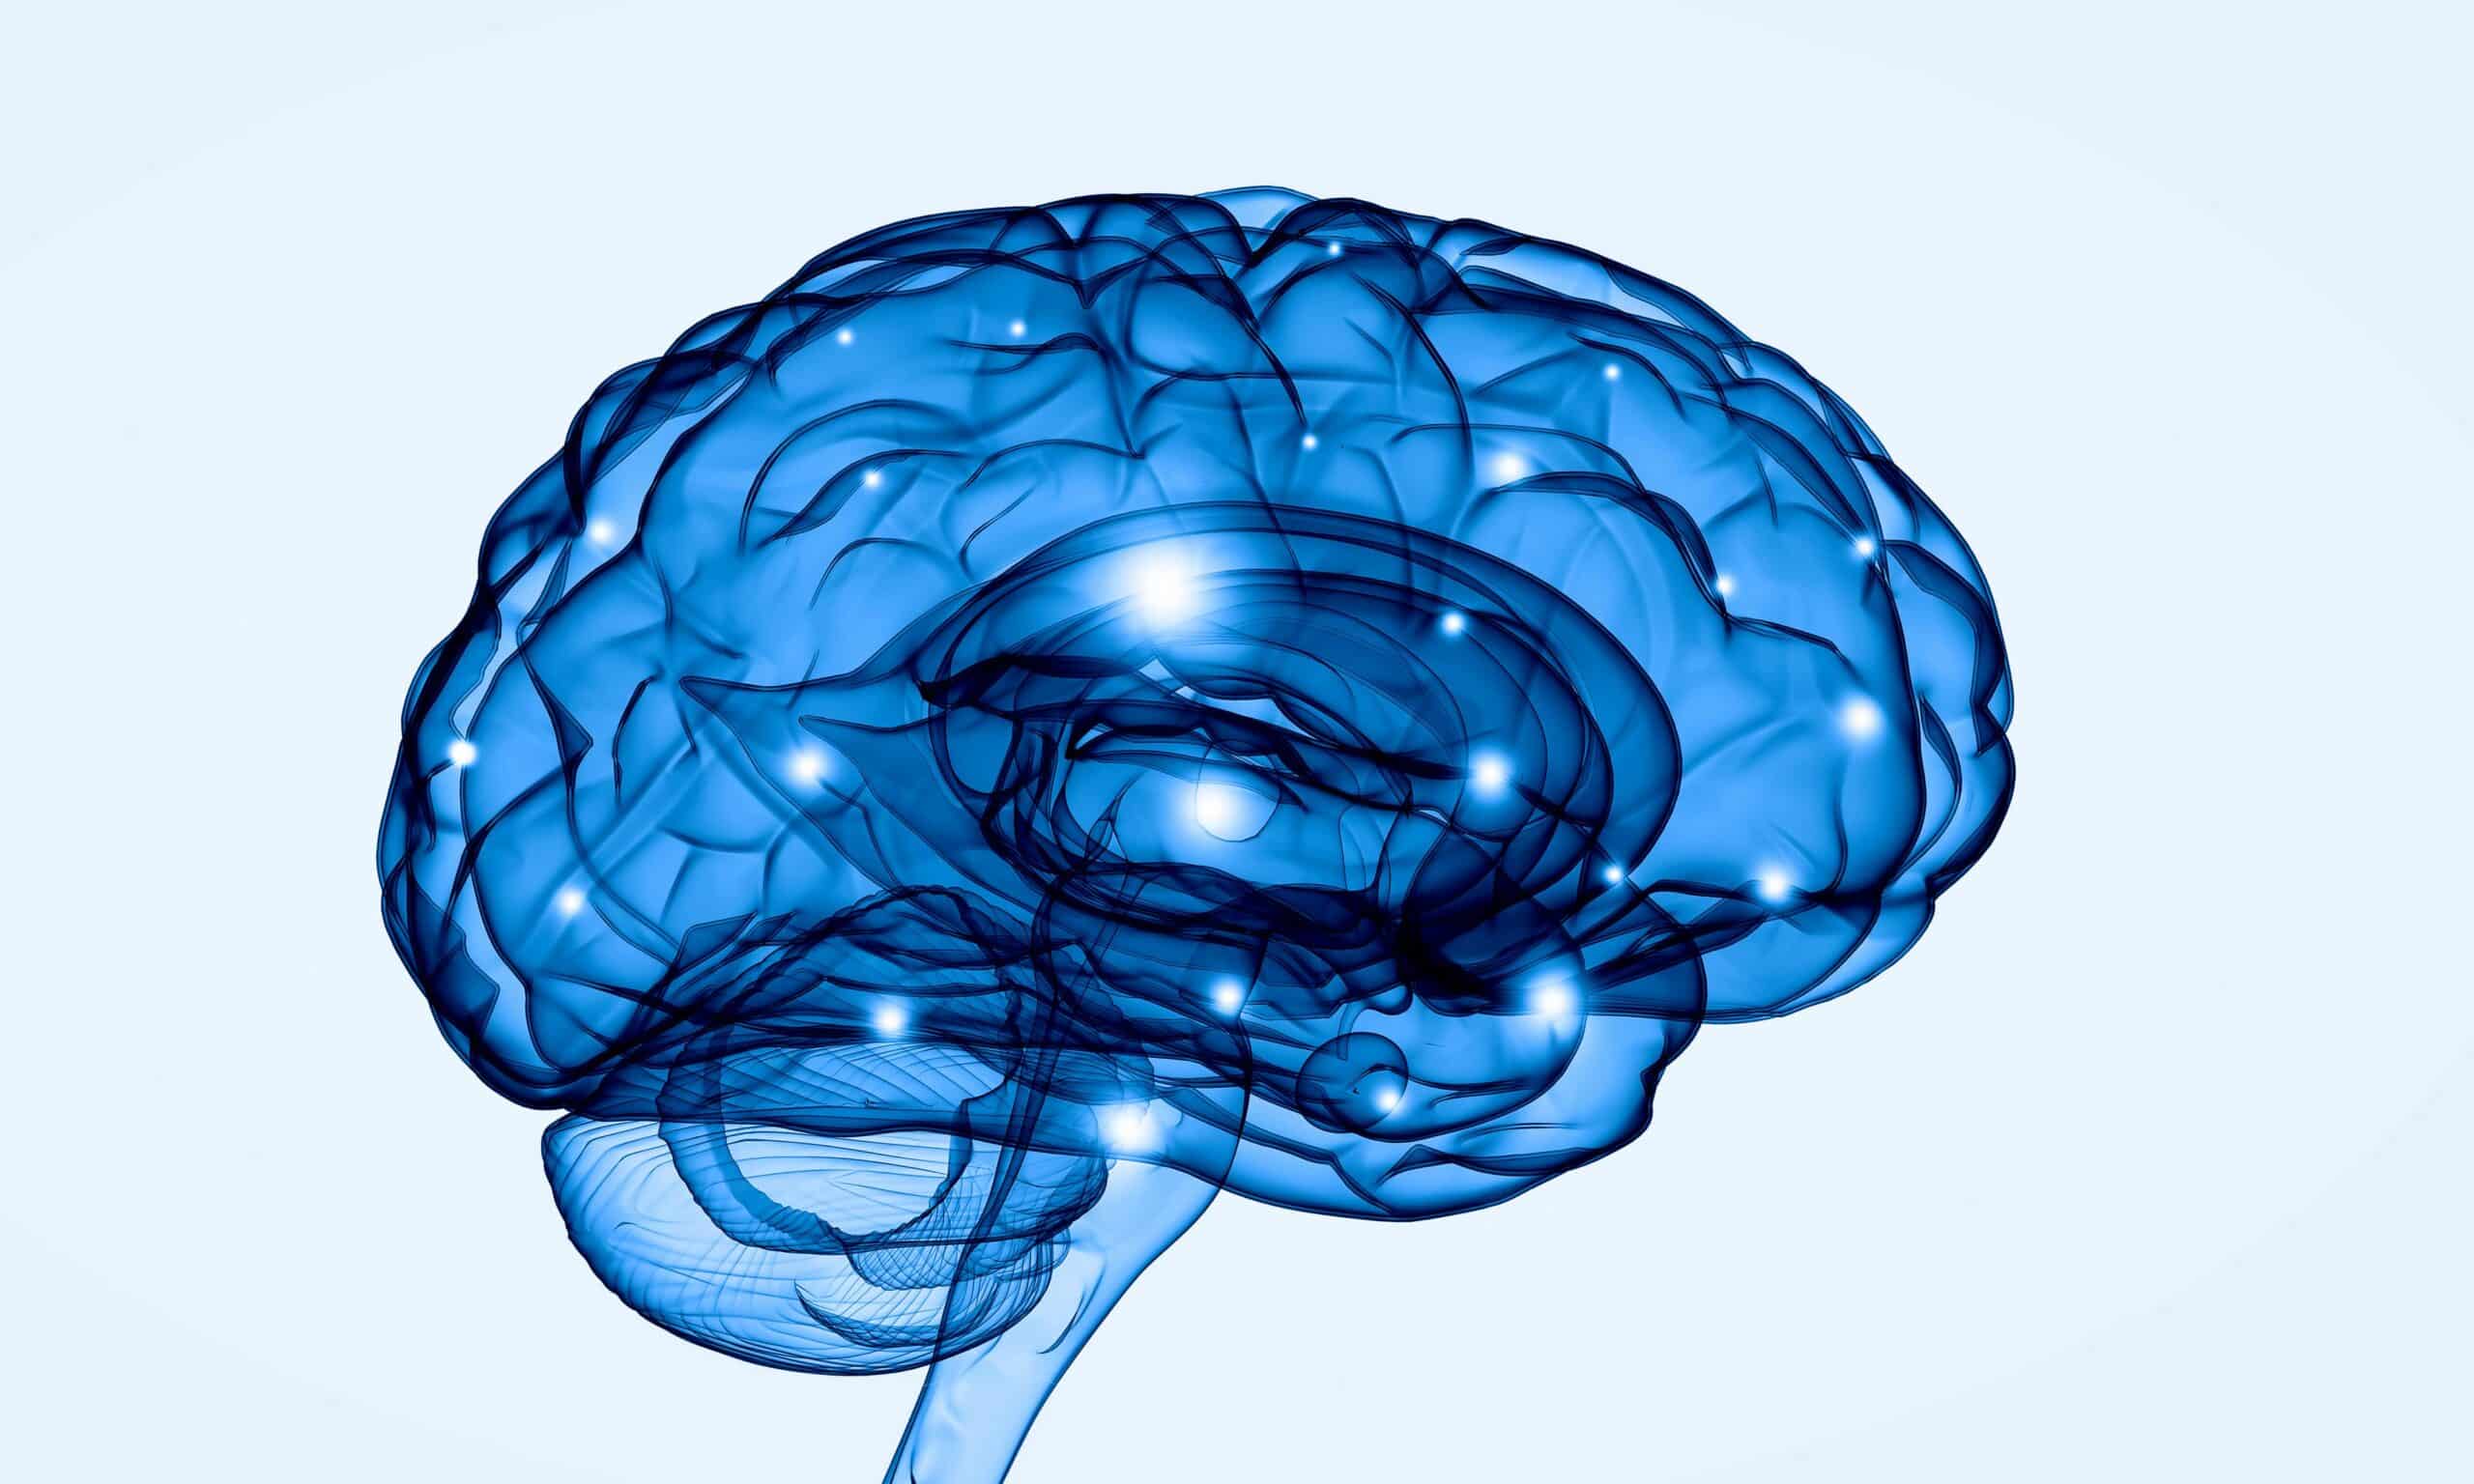 Blue-graphic-illustration-of-the-human-brain